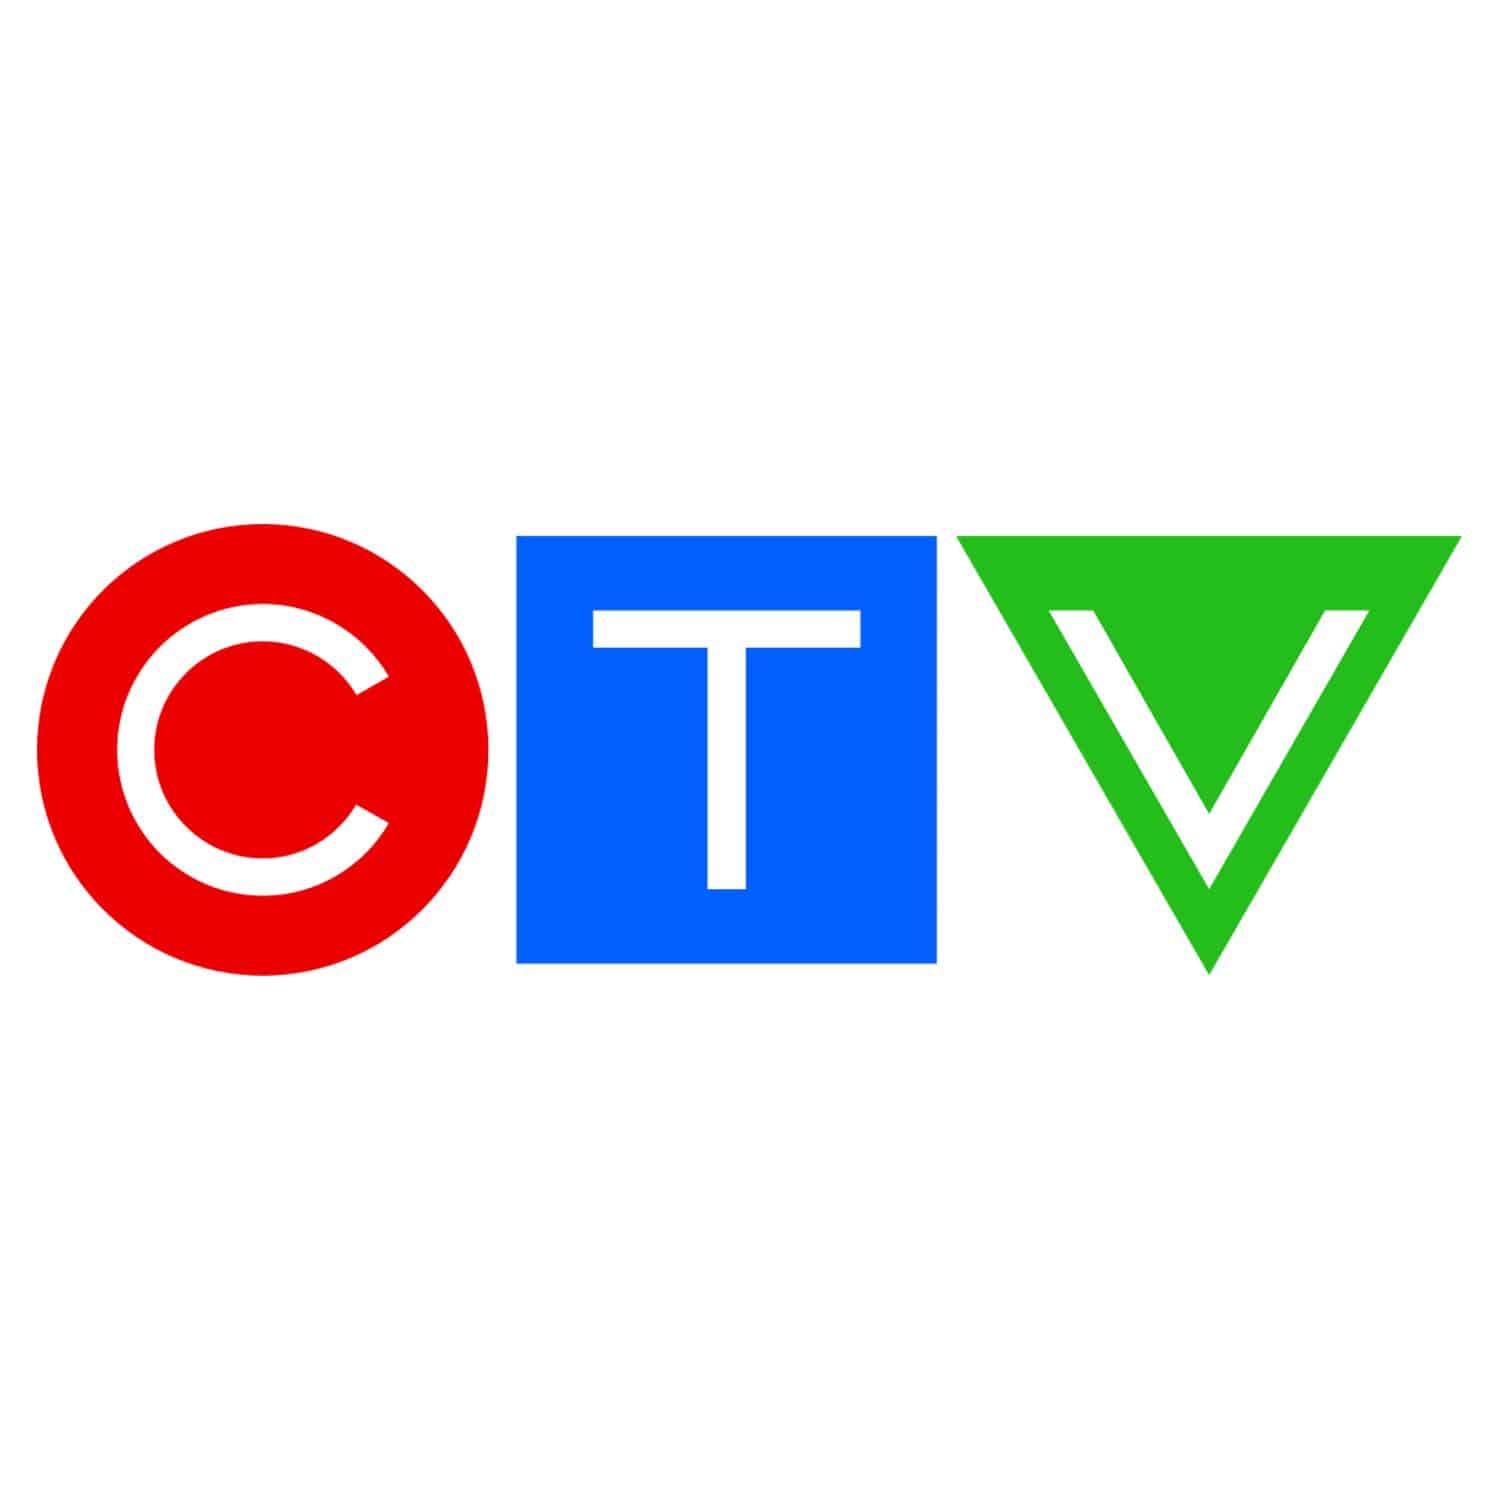 ctv news logo true condos